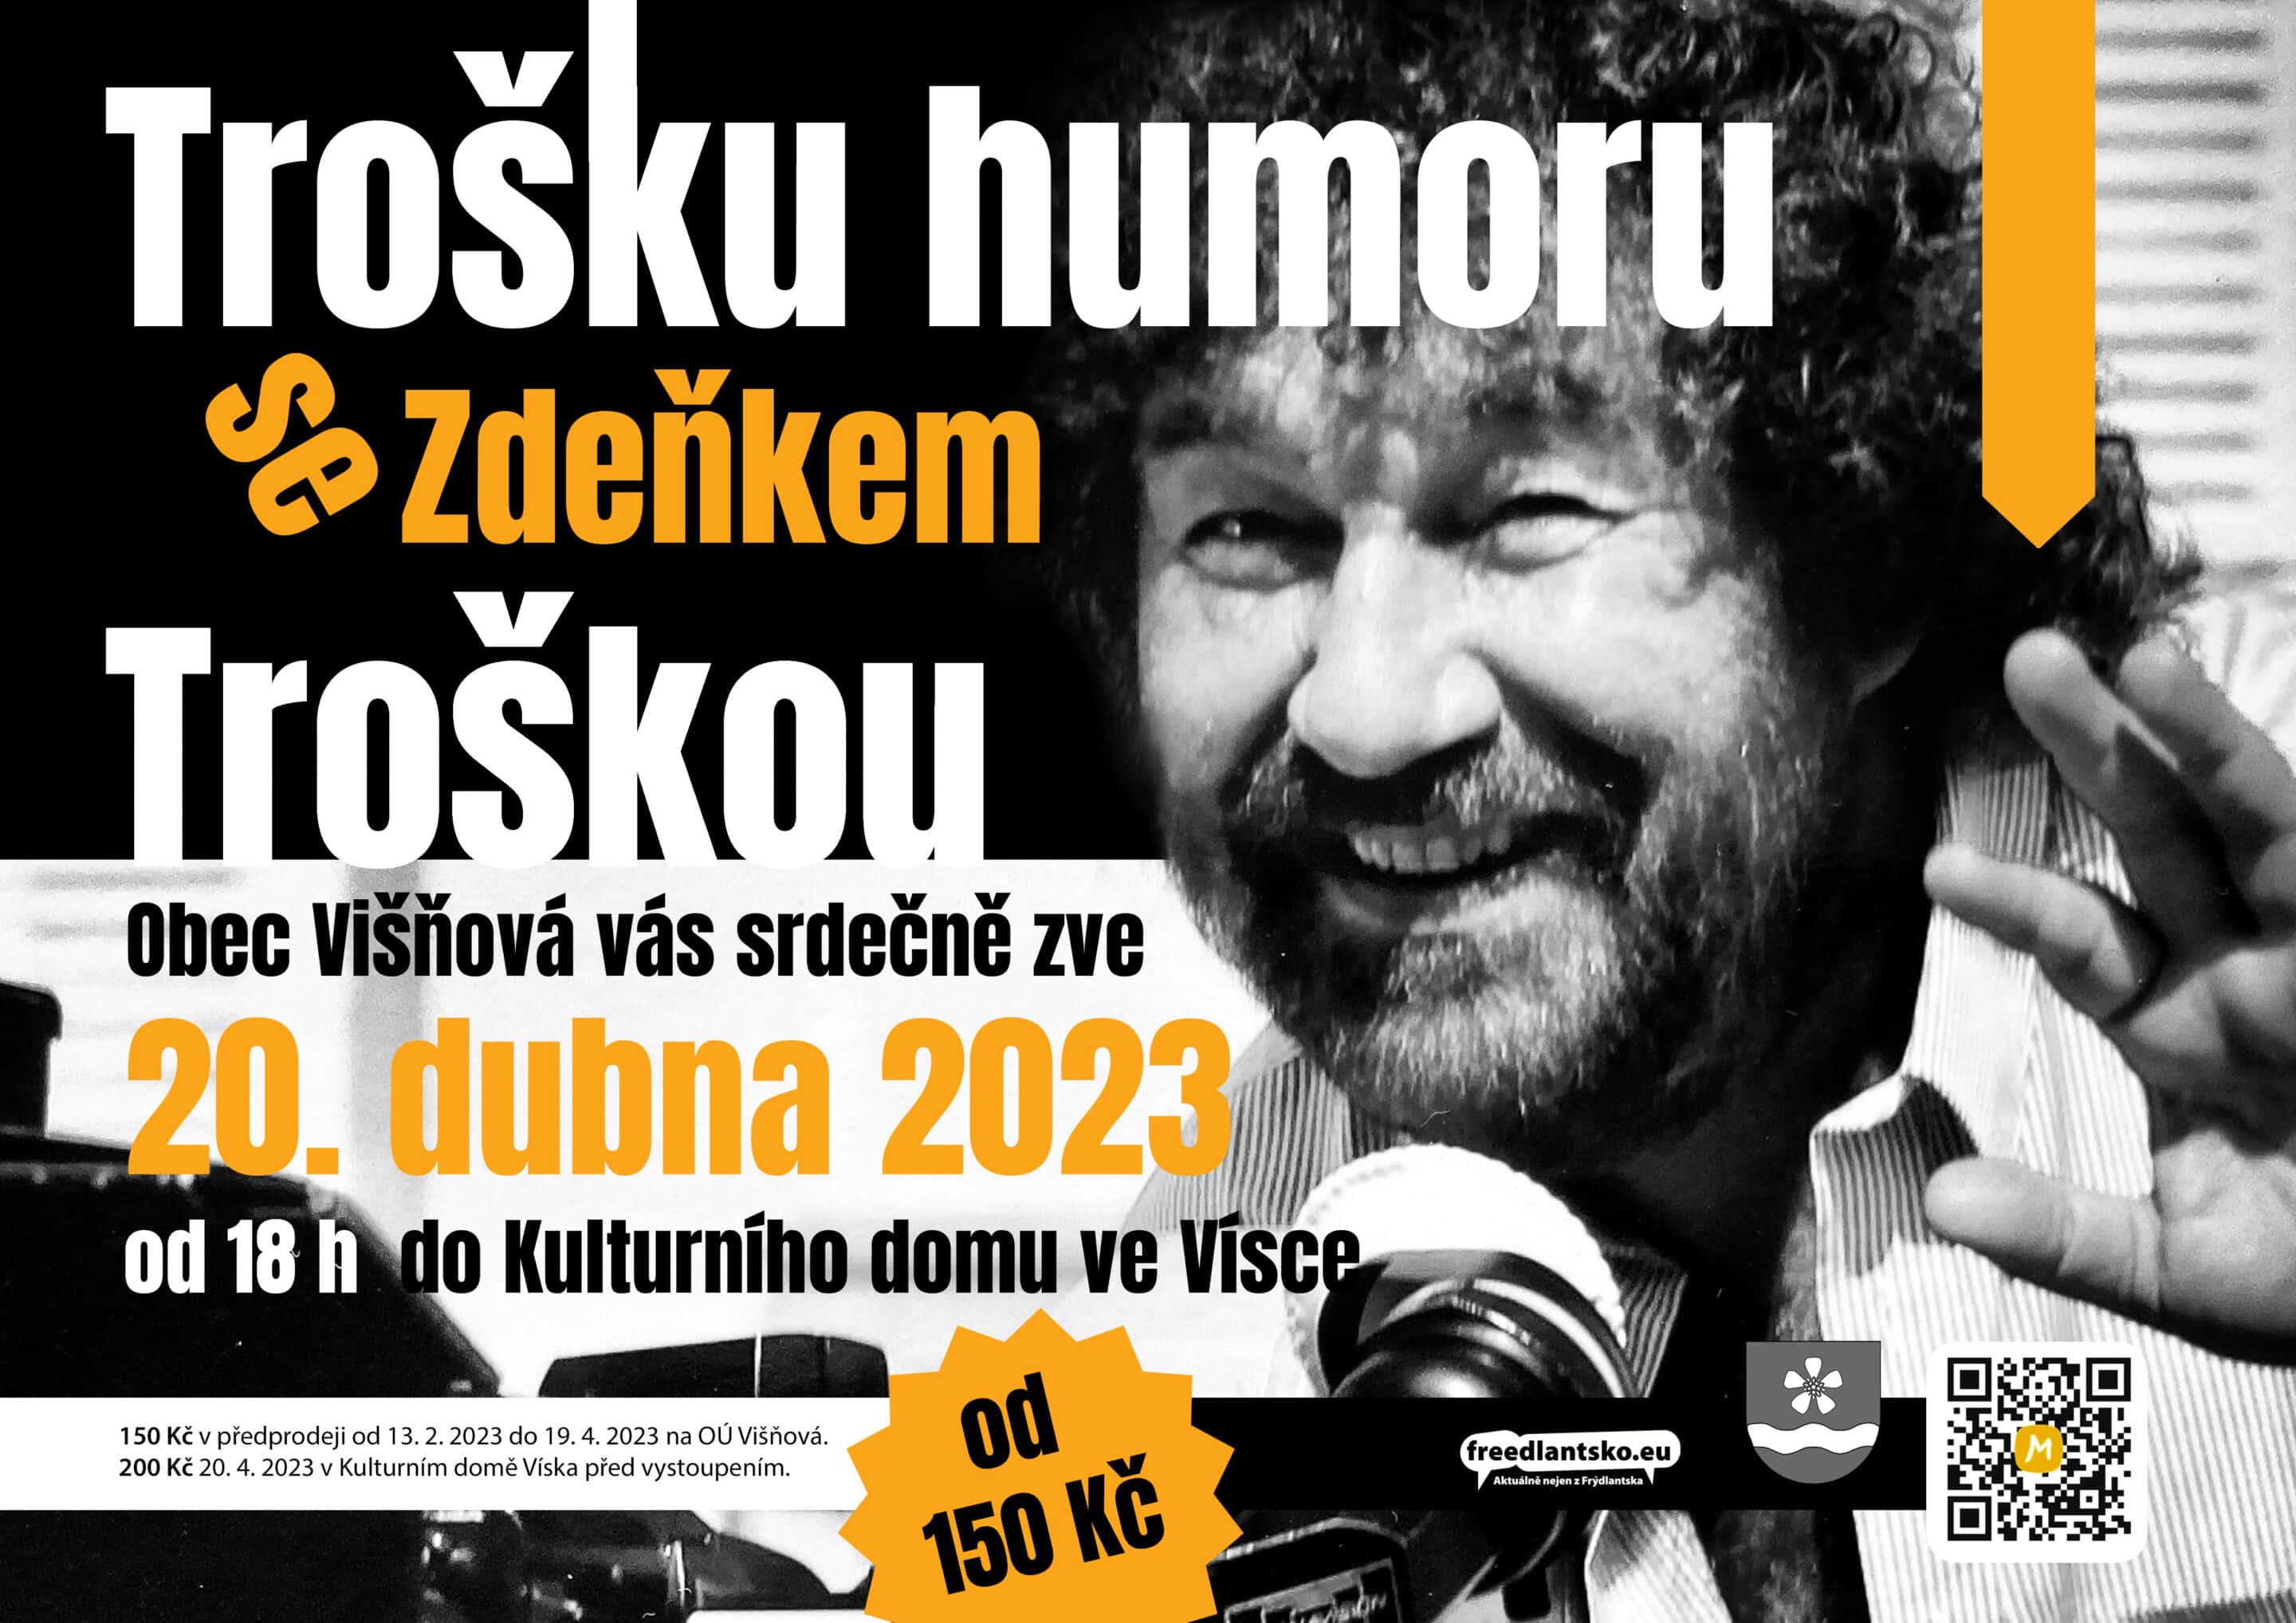 004 zdenek troska visnova 2023 plakat scaled